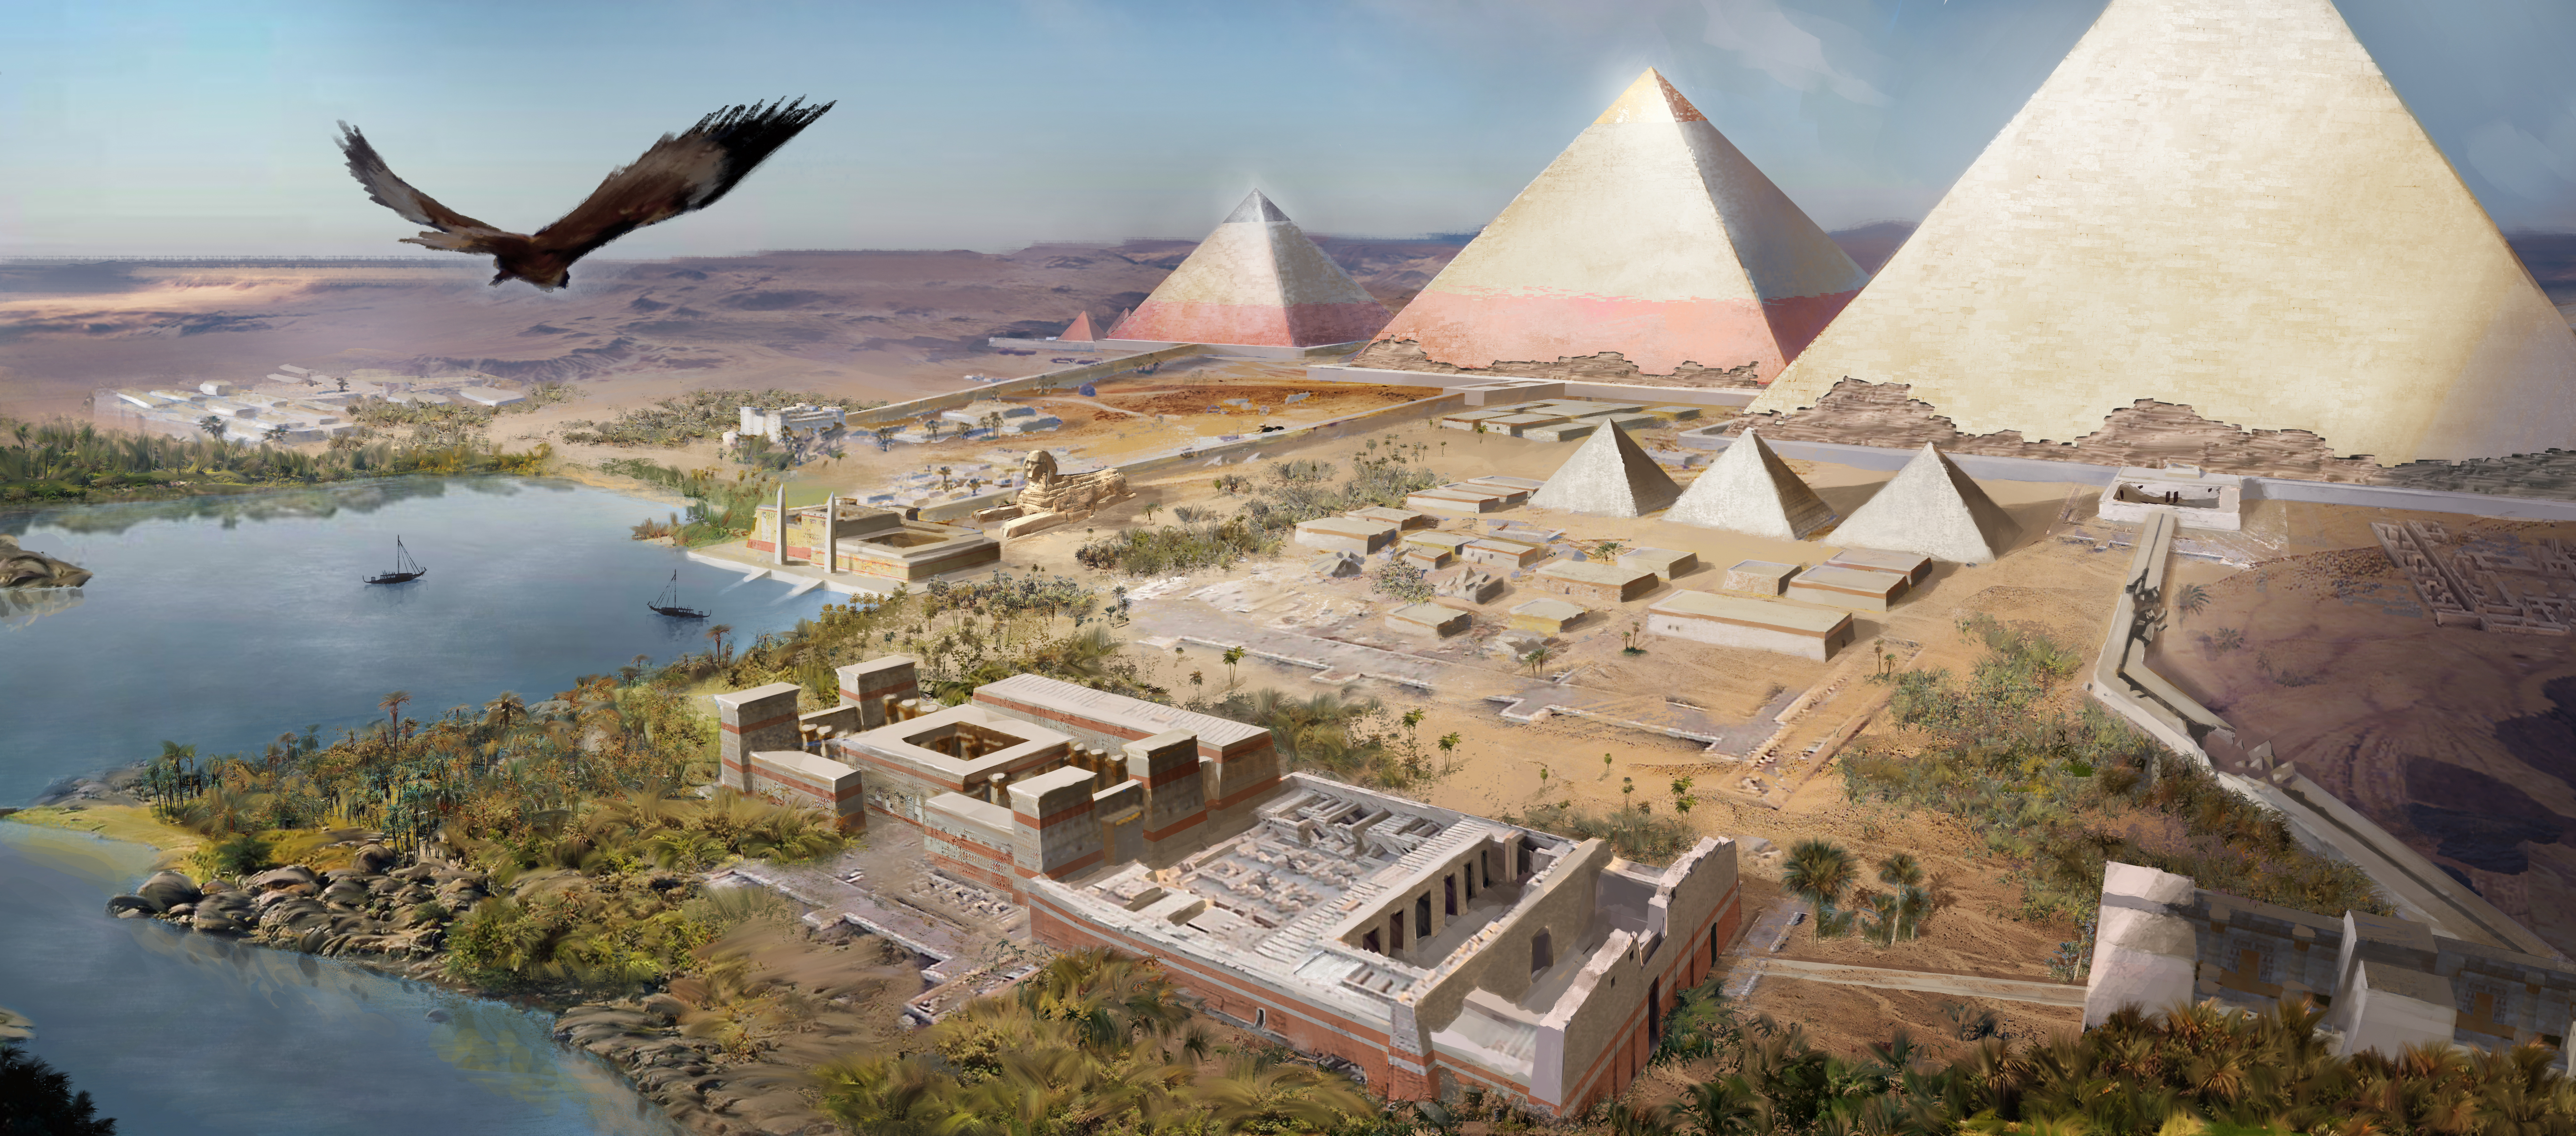 Assassins Creed: Origins, Video games, Artwork, Assassins Creed, Egypt, Landscape, Pyramids of Giza, Eagle, Ubisoft Wallpaper